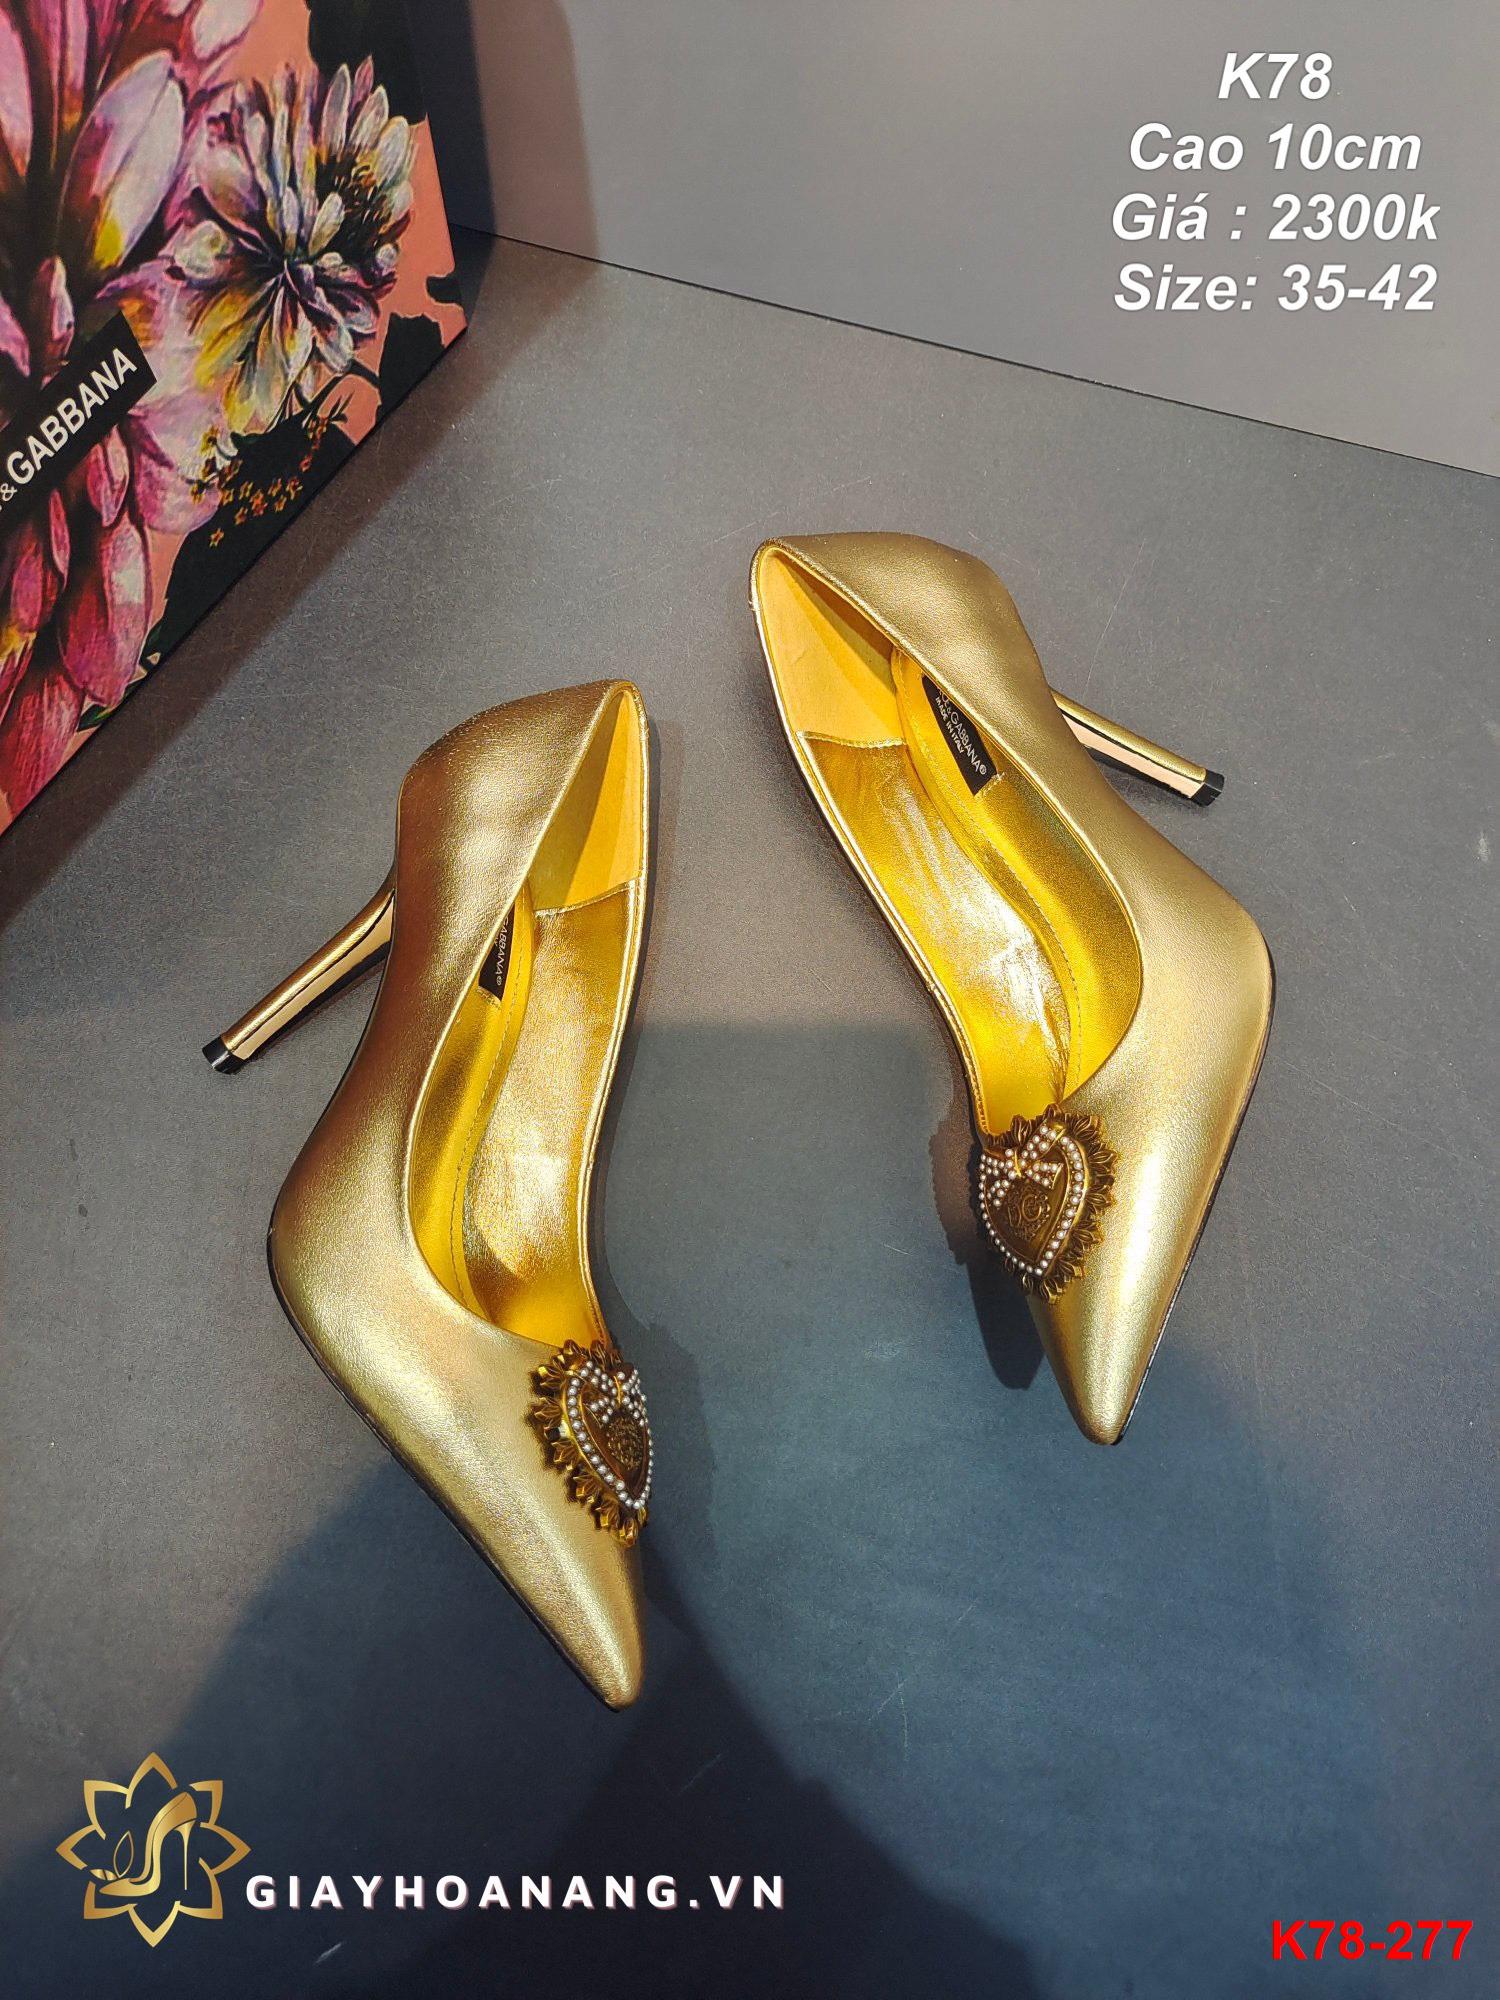 K78-277 Dolce & Gabbana giày cao 10cm siêu cấp